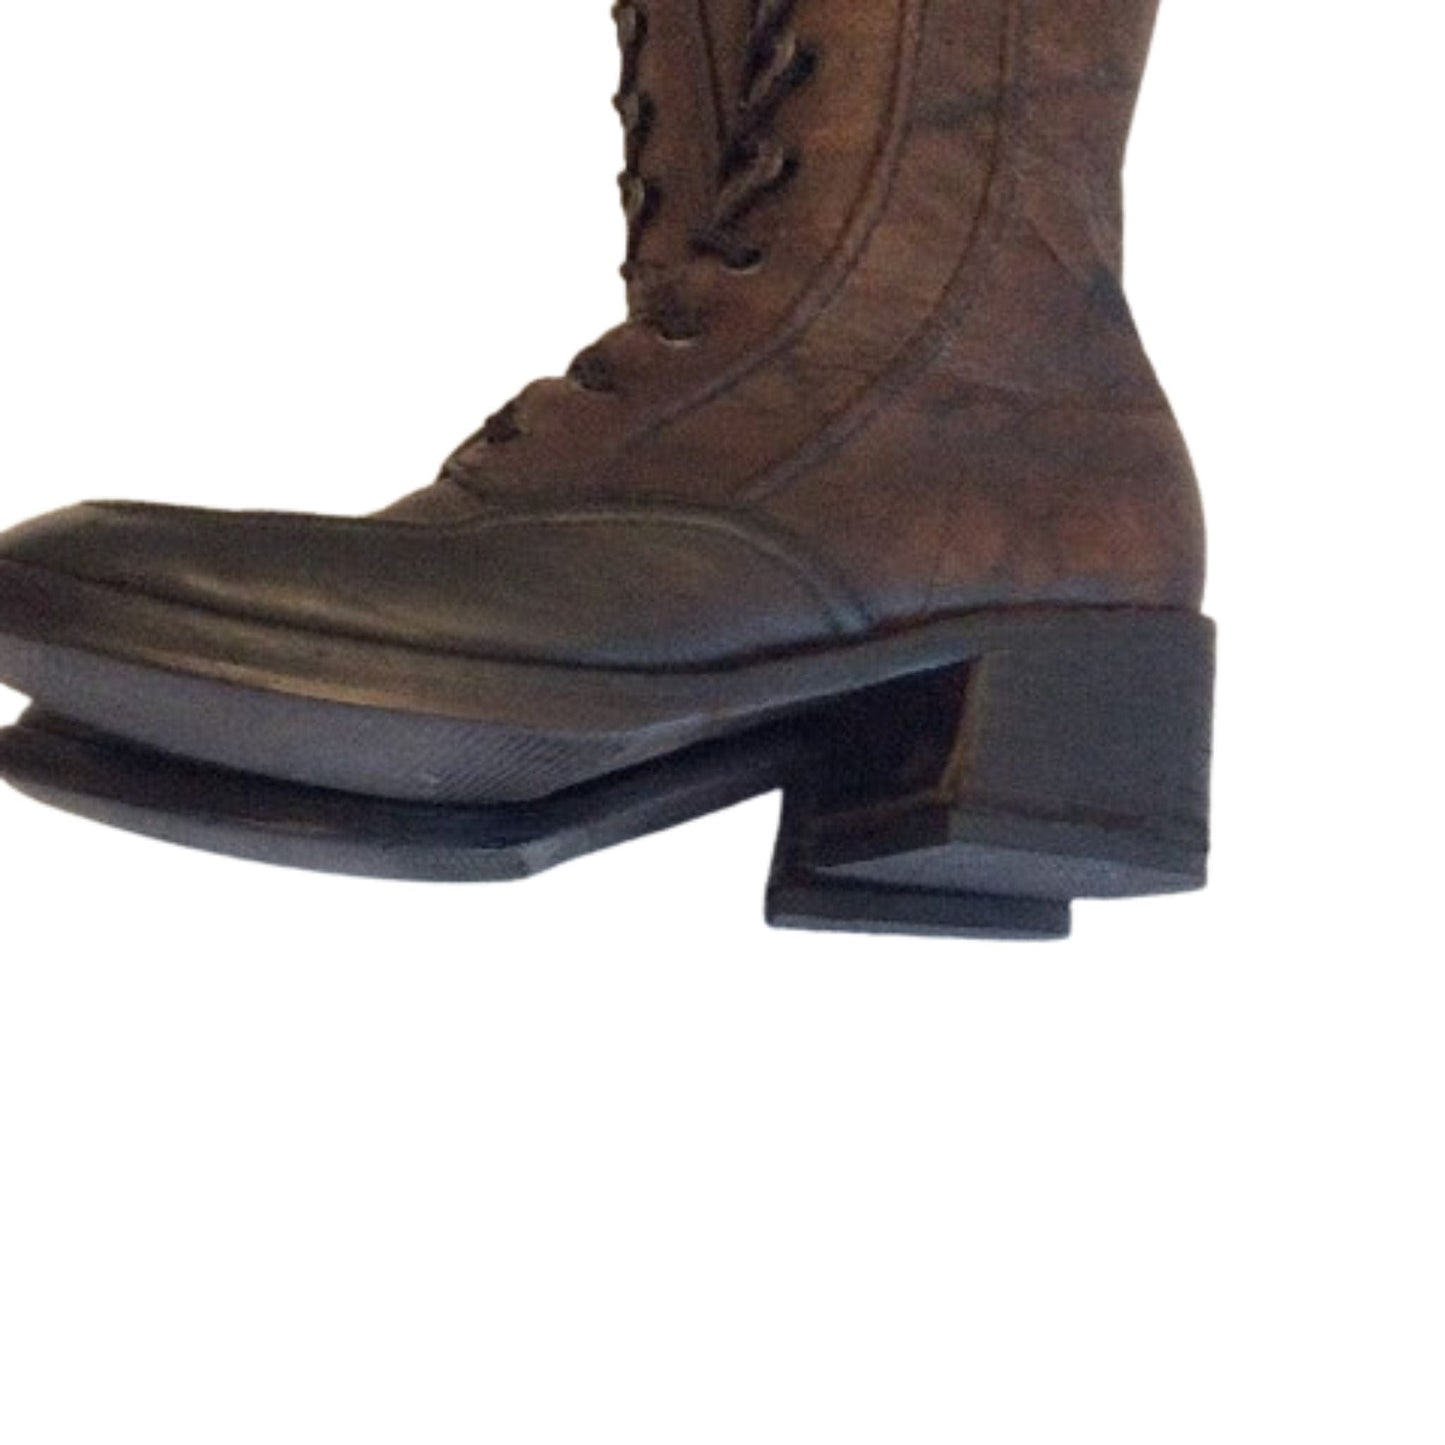 1970s Fashion Boots 6.5 / Brown / Boho